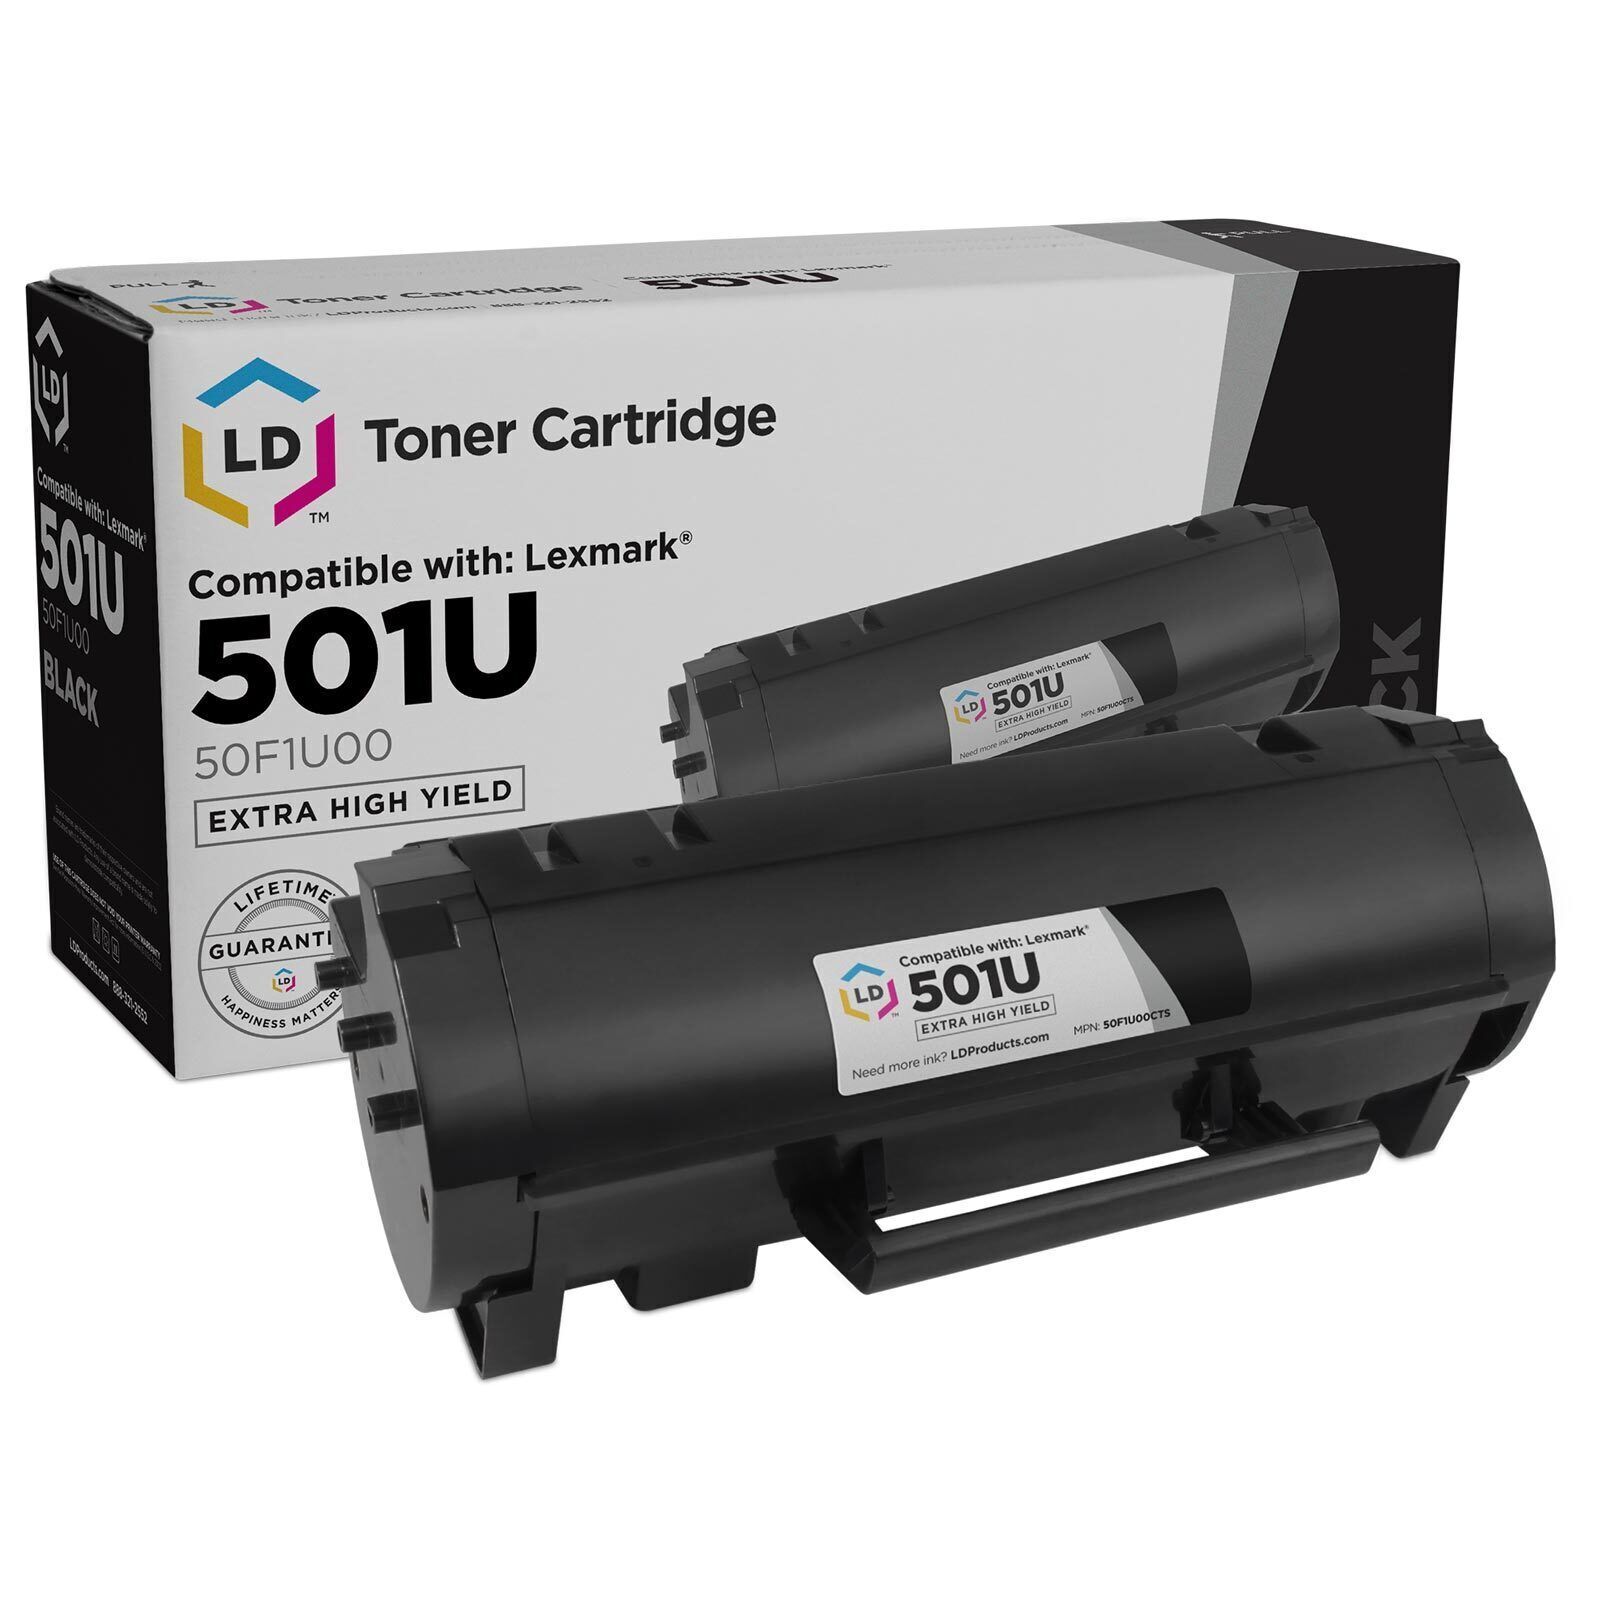 LD 50F1U00 501U Black Laser Toner Cartridge for Lexmark Printer